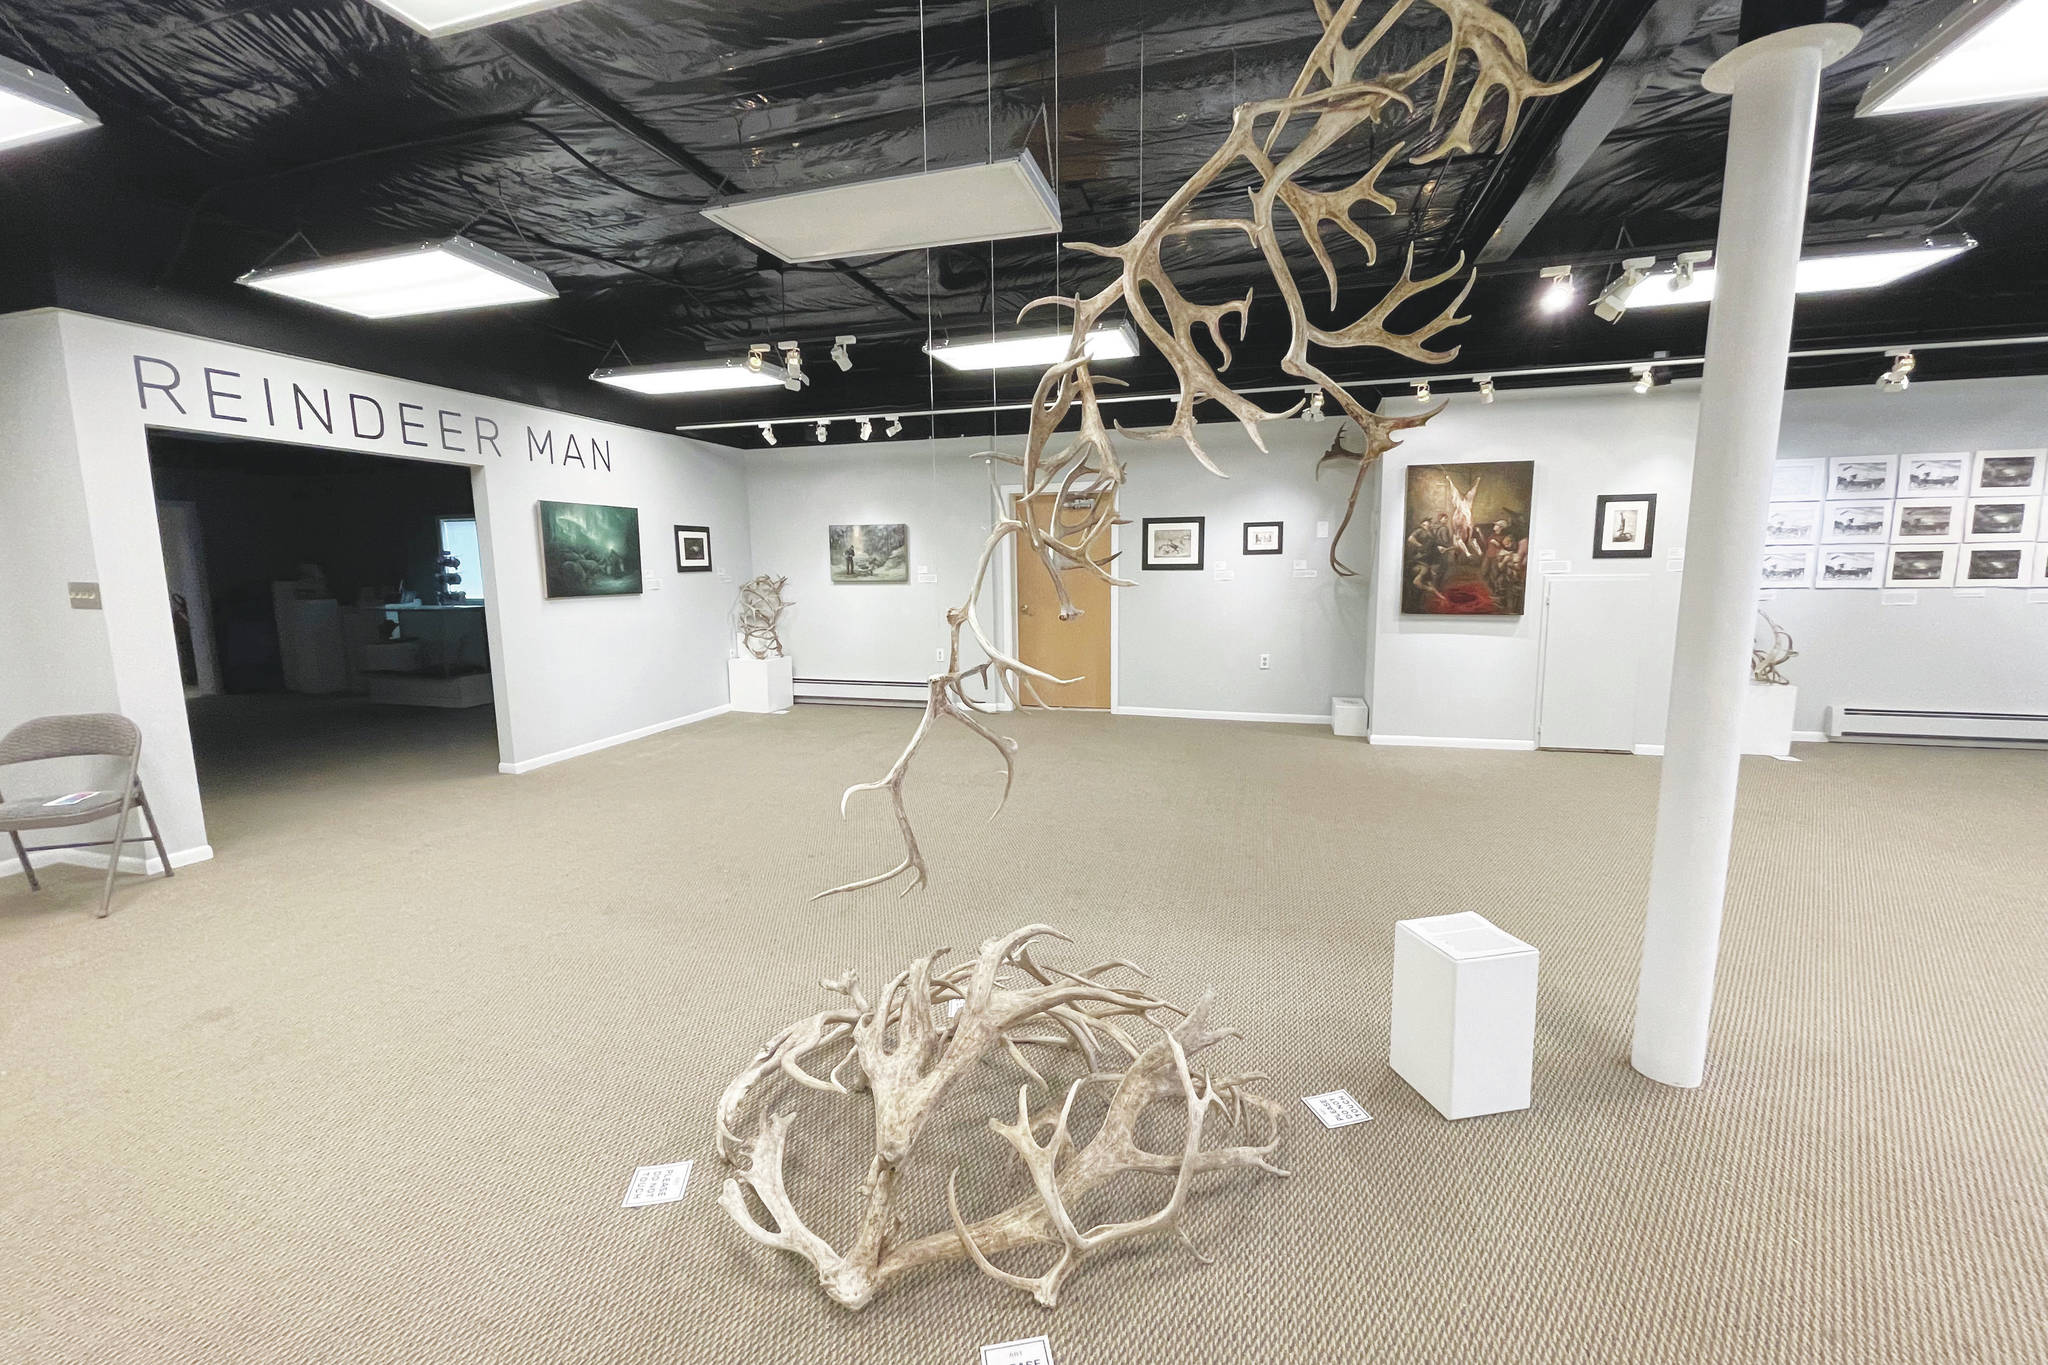 The “Reindeer Man” exhibit featuring work by Kenai Art Center Executive Director Alex Rydlinski can be seen on Wednesday, Sept. 1, 2021, in Kenai, Alaska. (Photo courtesy Alex Rydlinski)